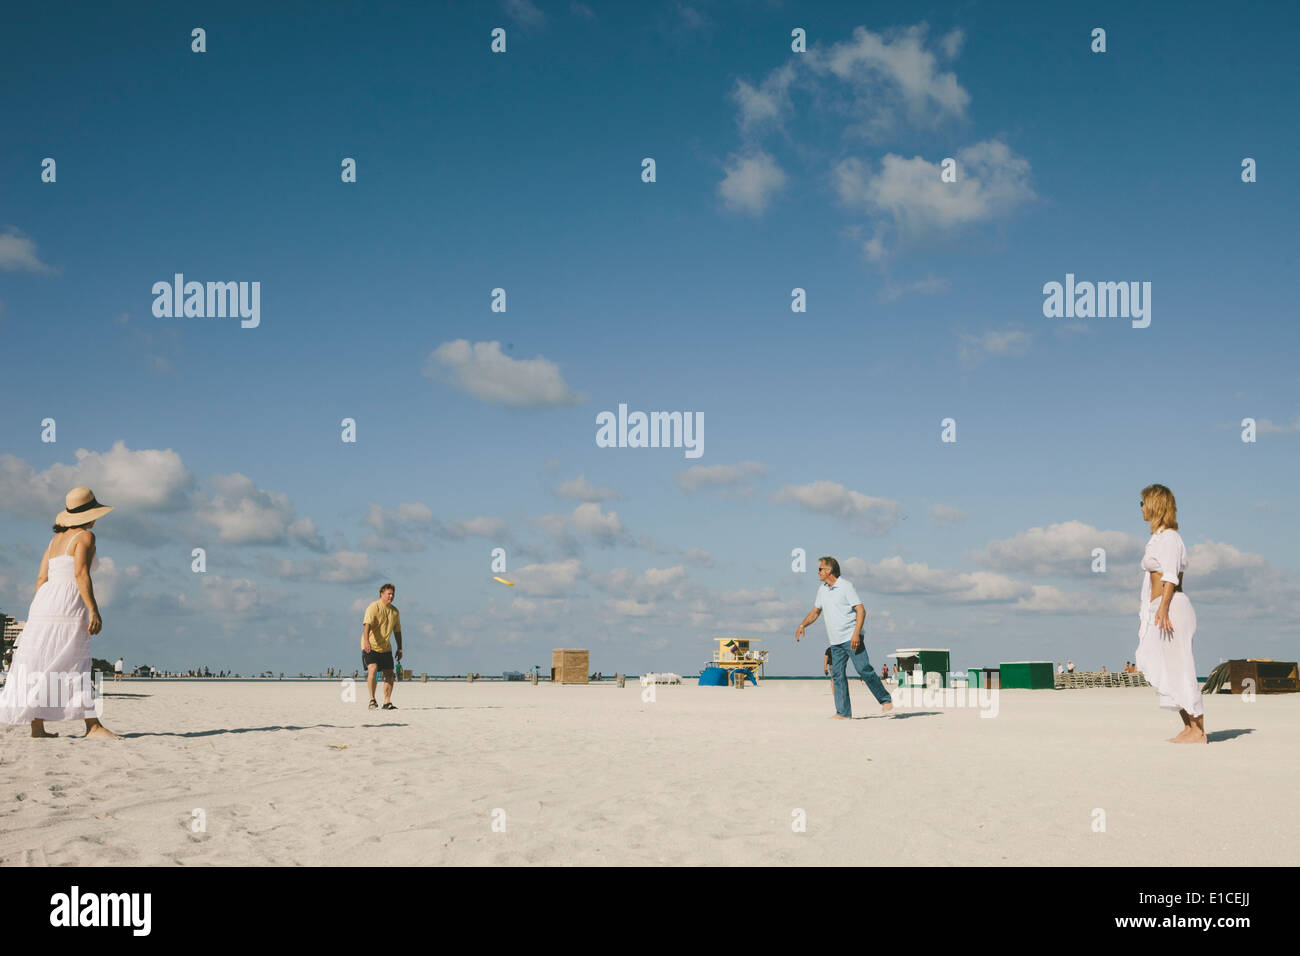 Senior citizens having fun playing frisbee at beach Stock Photo